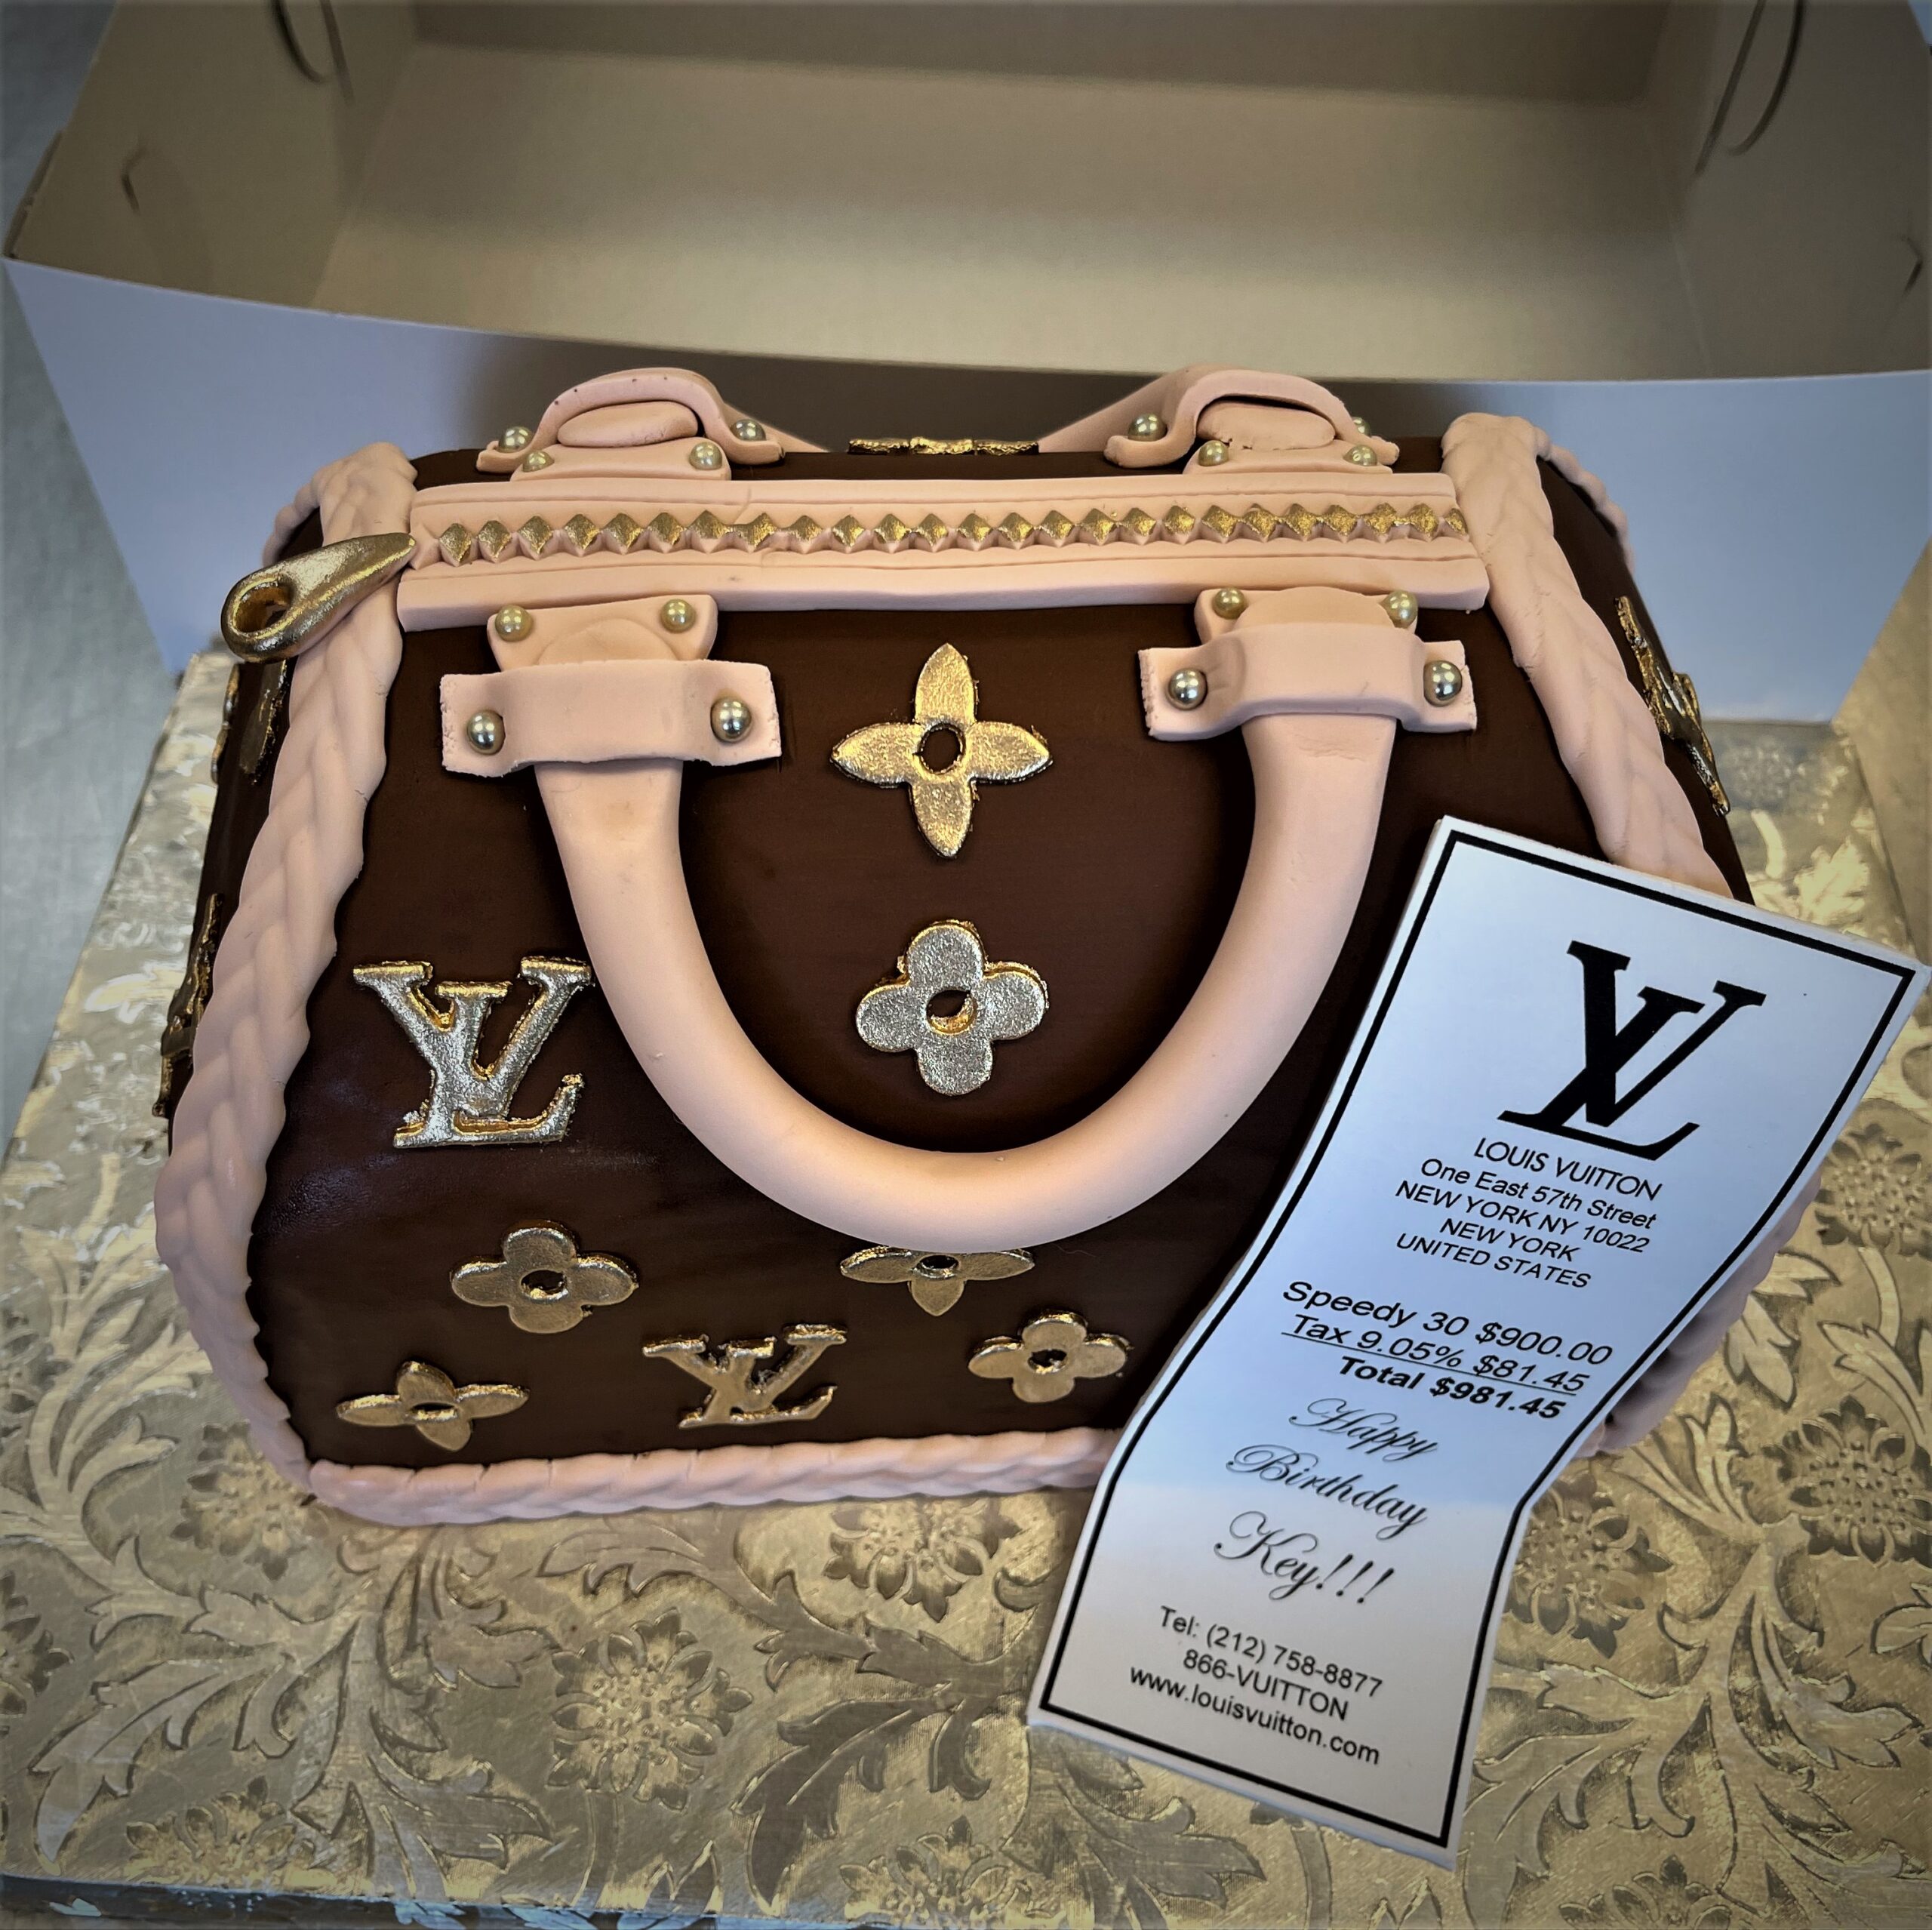 Sugar Rush Cakes Montreal - Louis Vuitton suitcase cake